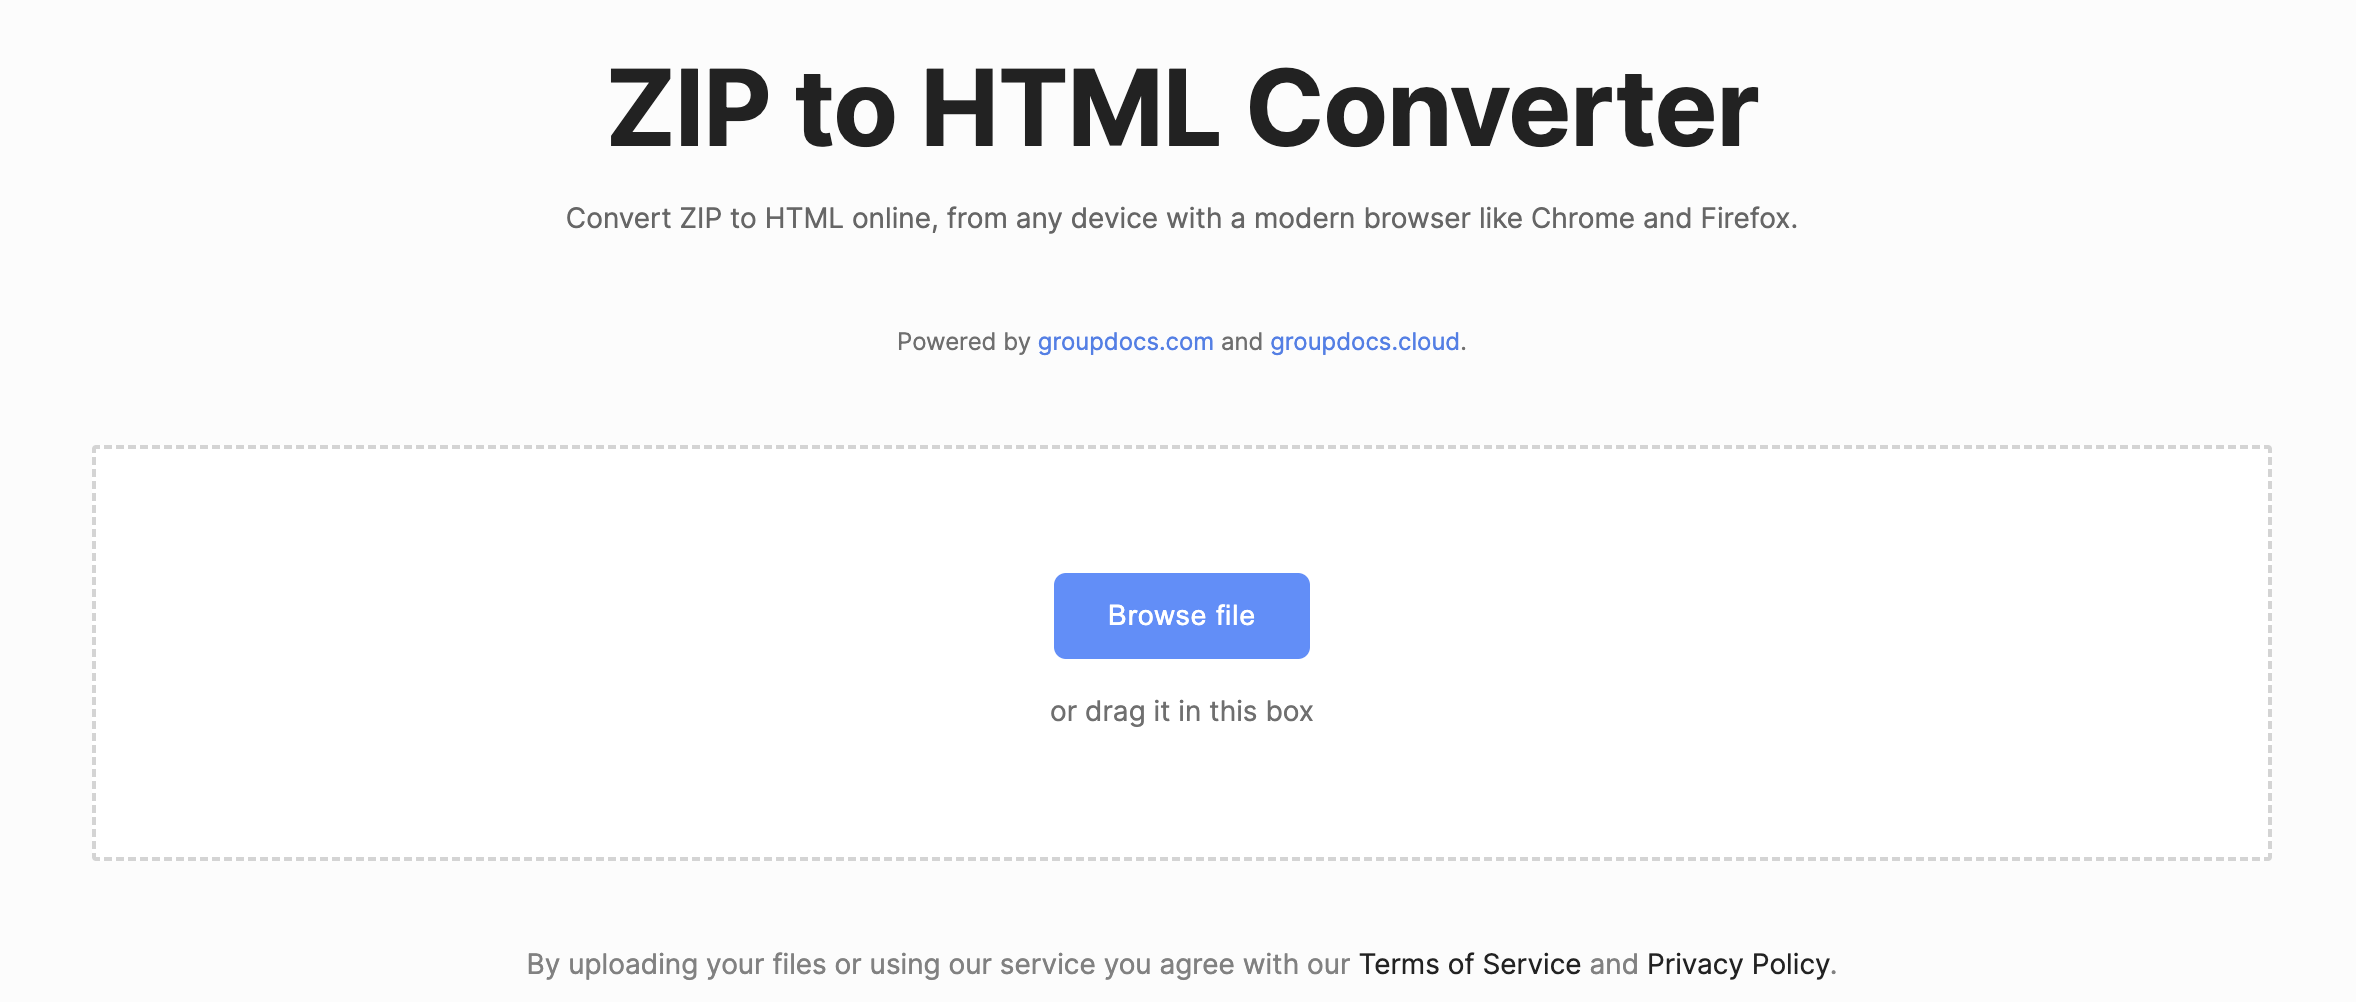 Konvertieren Sie ZIP online in HTML